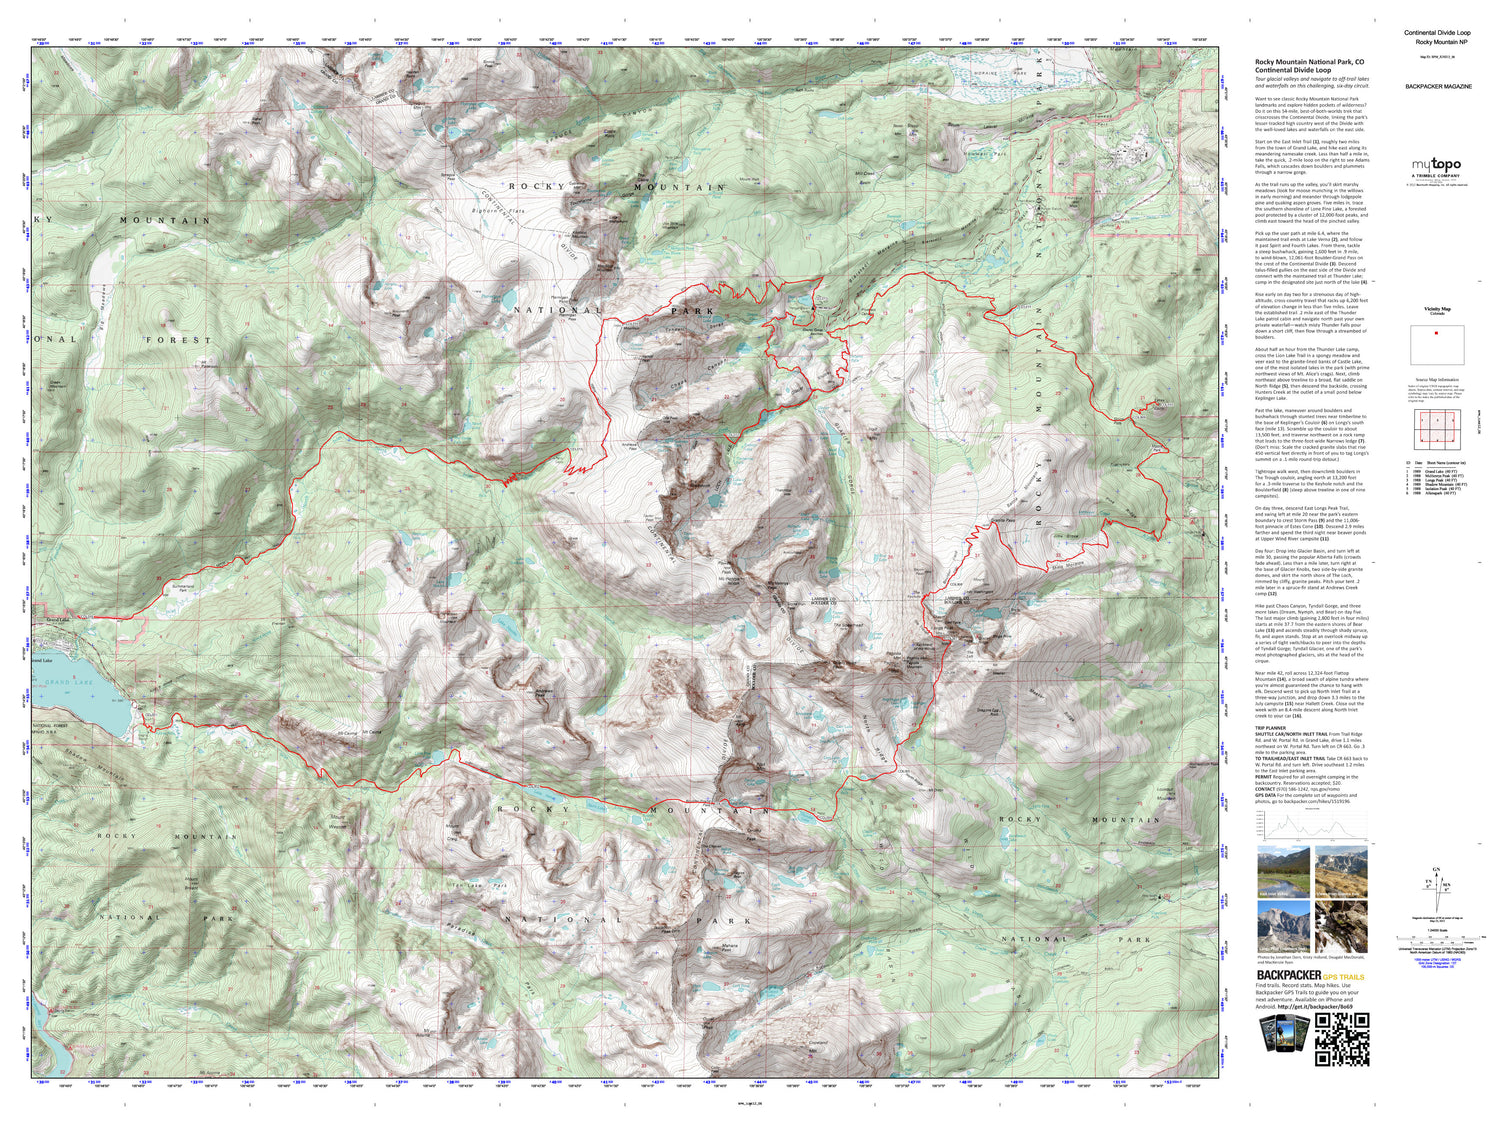 Continental Divide Loop Map (Rocky Mountain NP, Colorado) Image